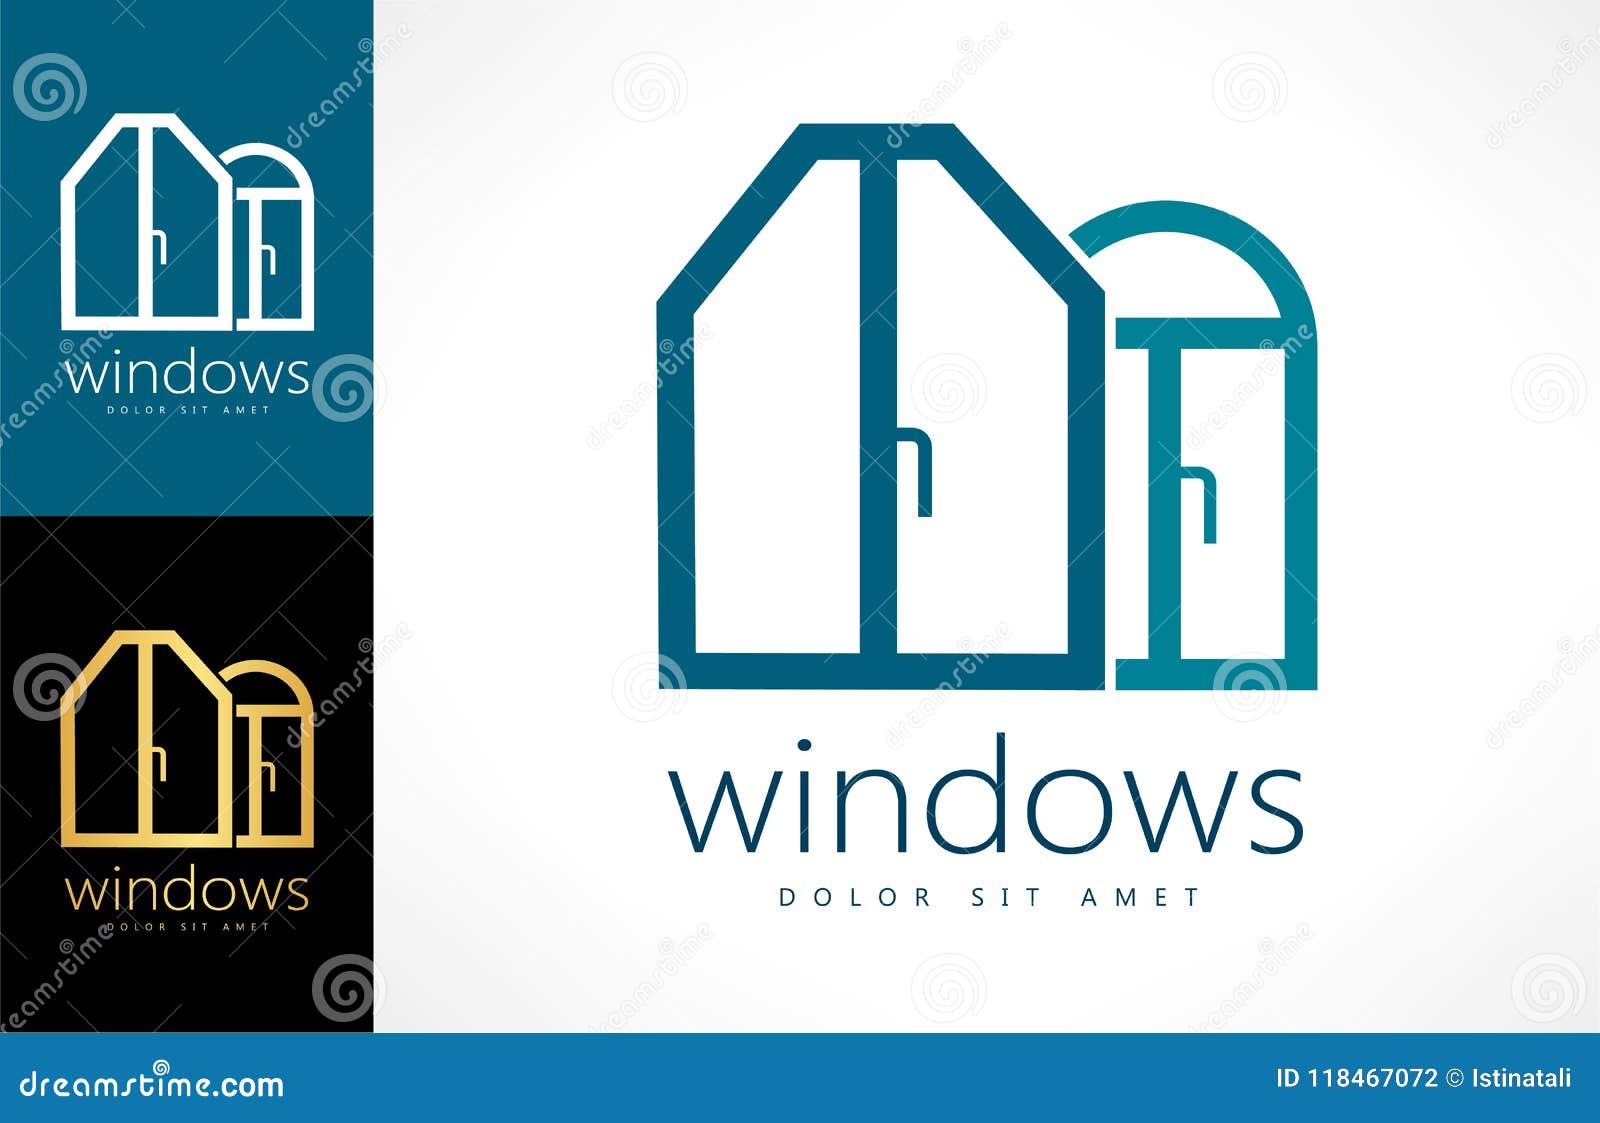 logo design cool windows